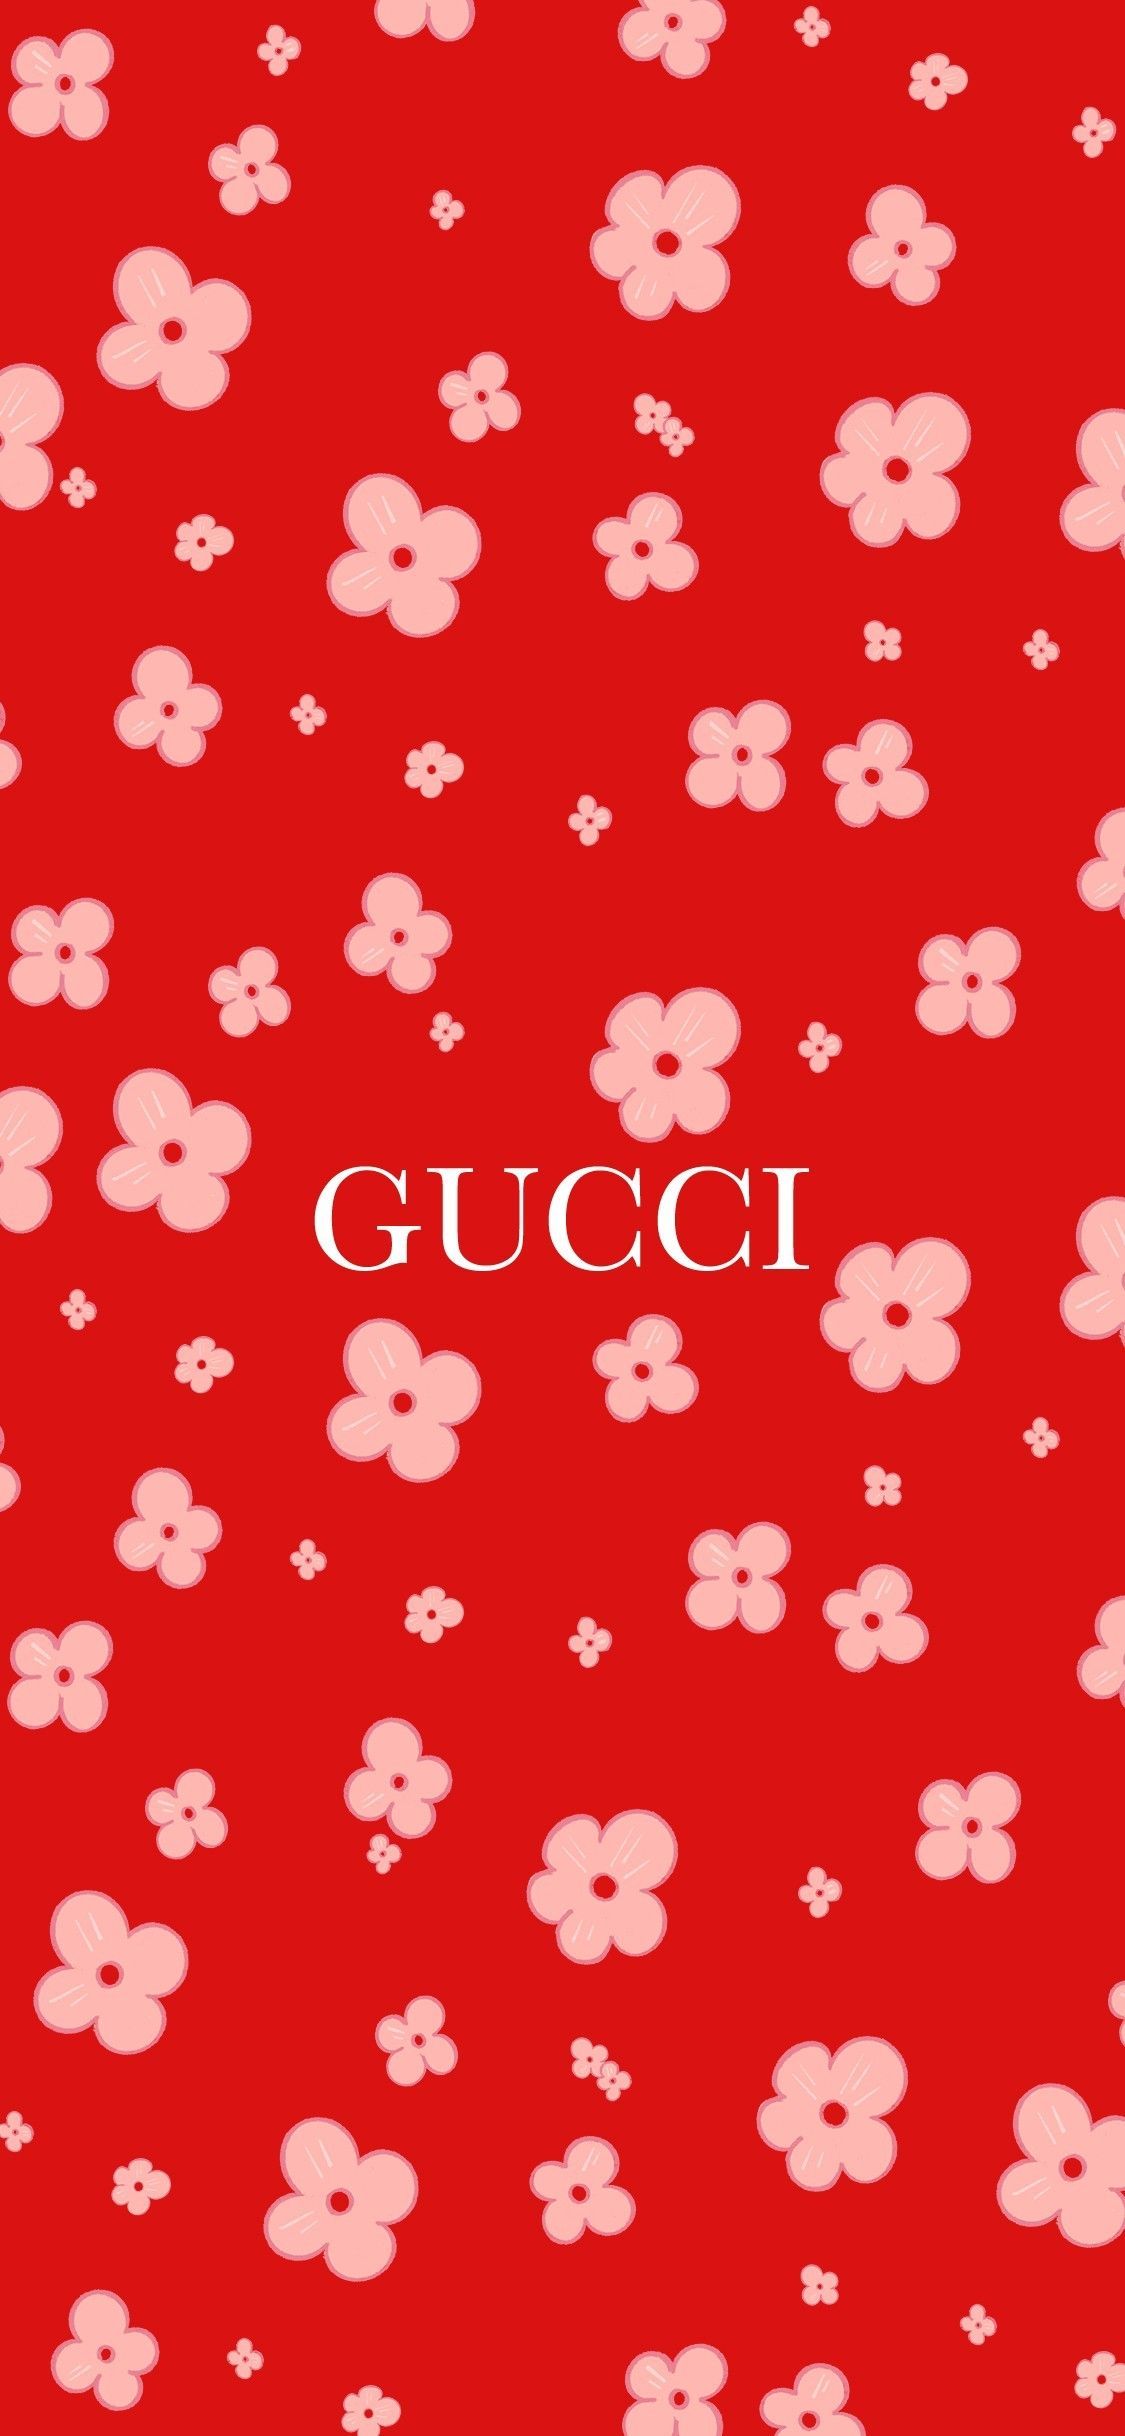 Gucci Wallpaper. iPhone wallpaper girly, iPhone background wallpaper, Wallpaper tumblr lockscreen